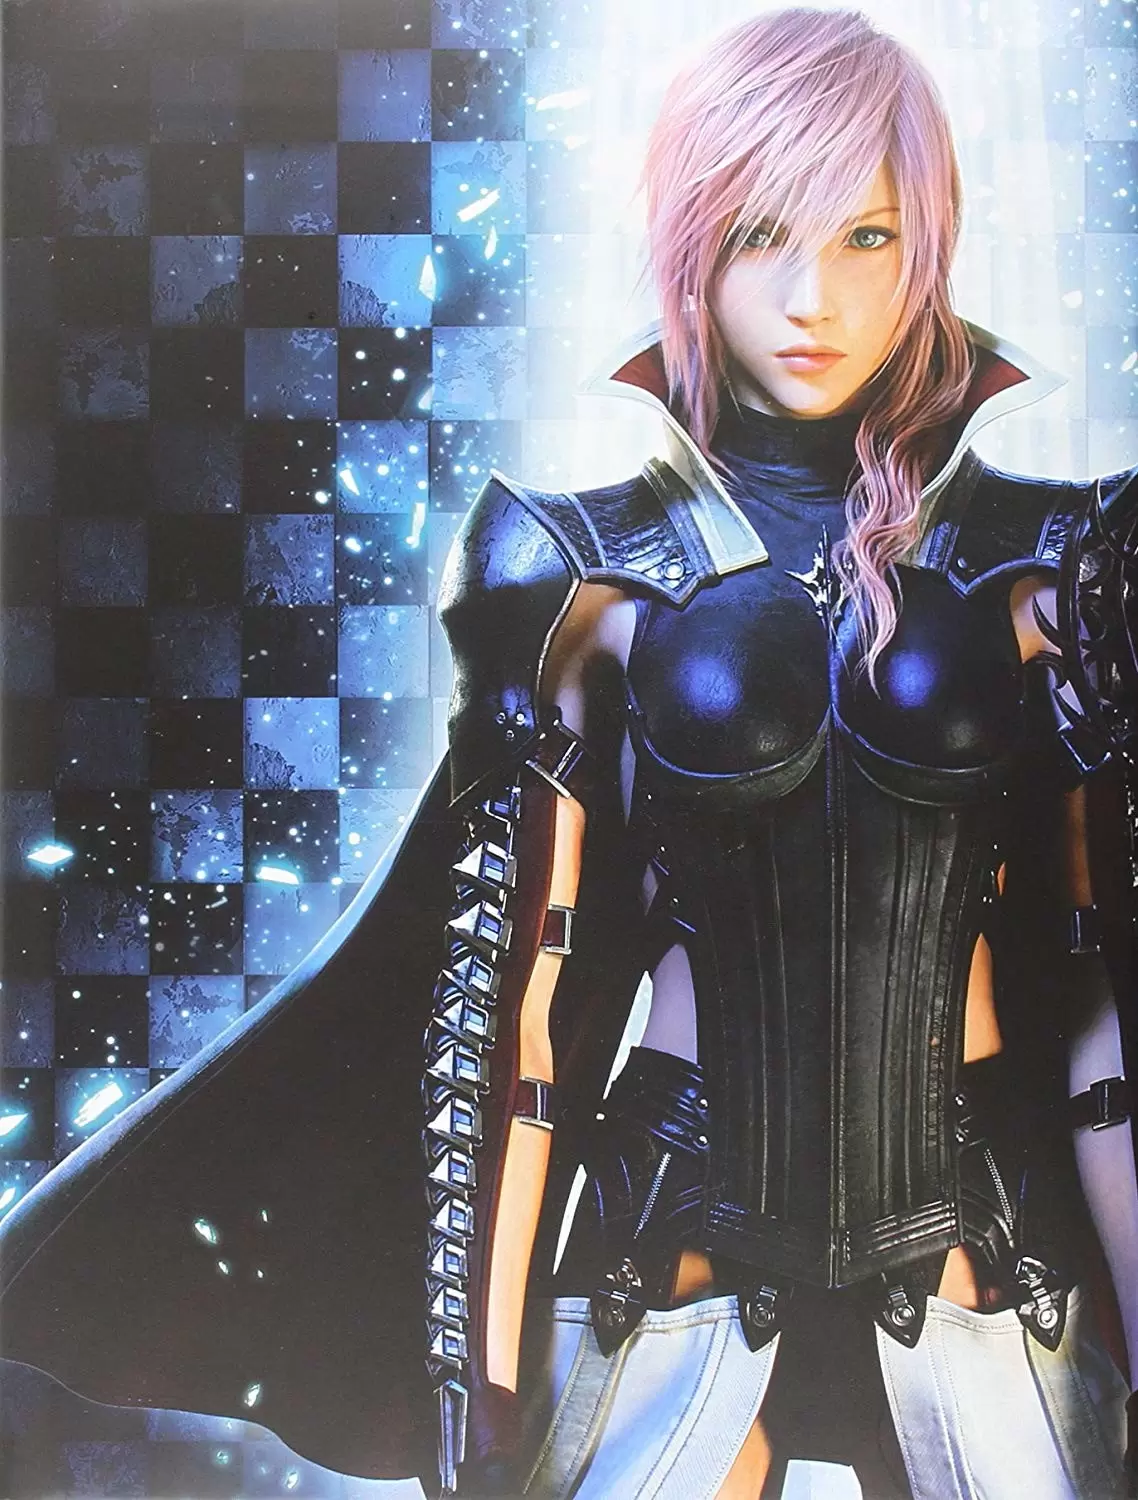 Guides Jeux Vidéos - Lightning Returns Final Fantasy XIII - Le guide officiel complet Edition Collector